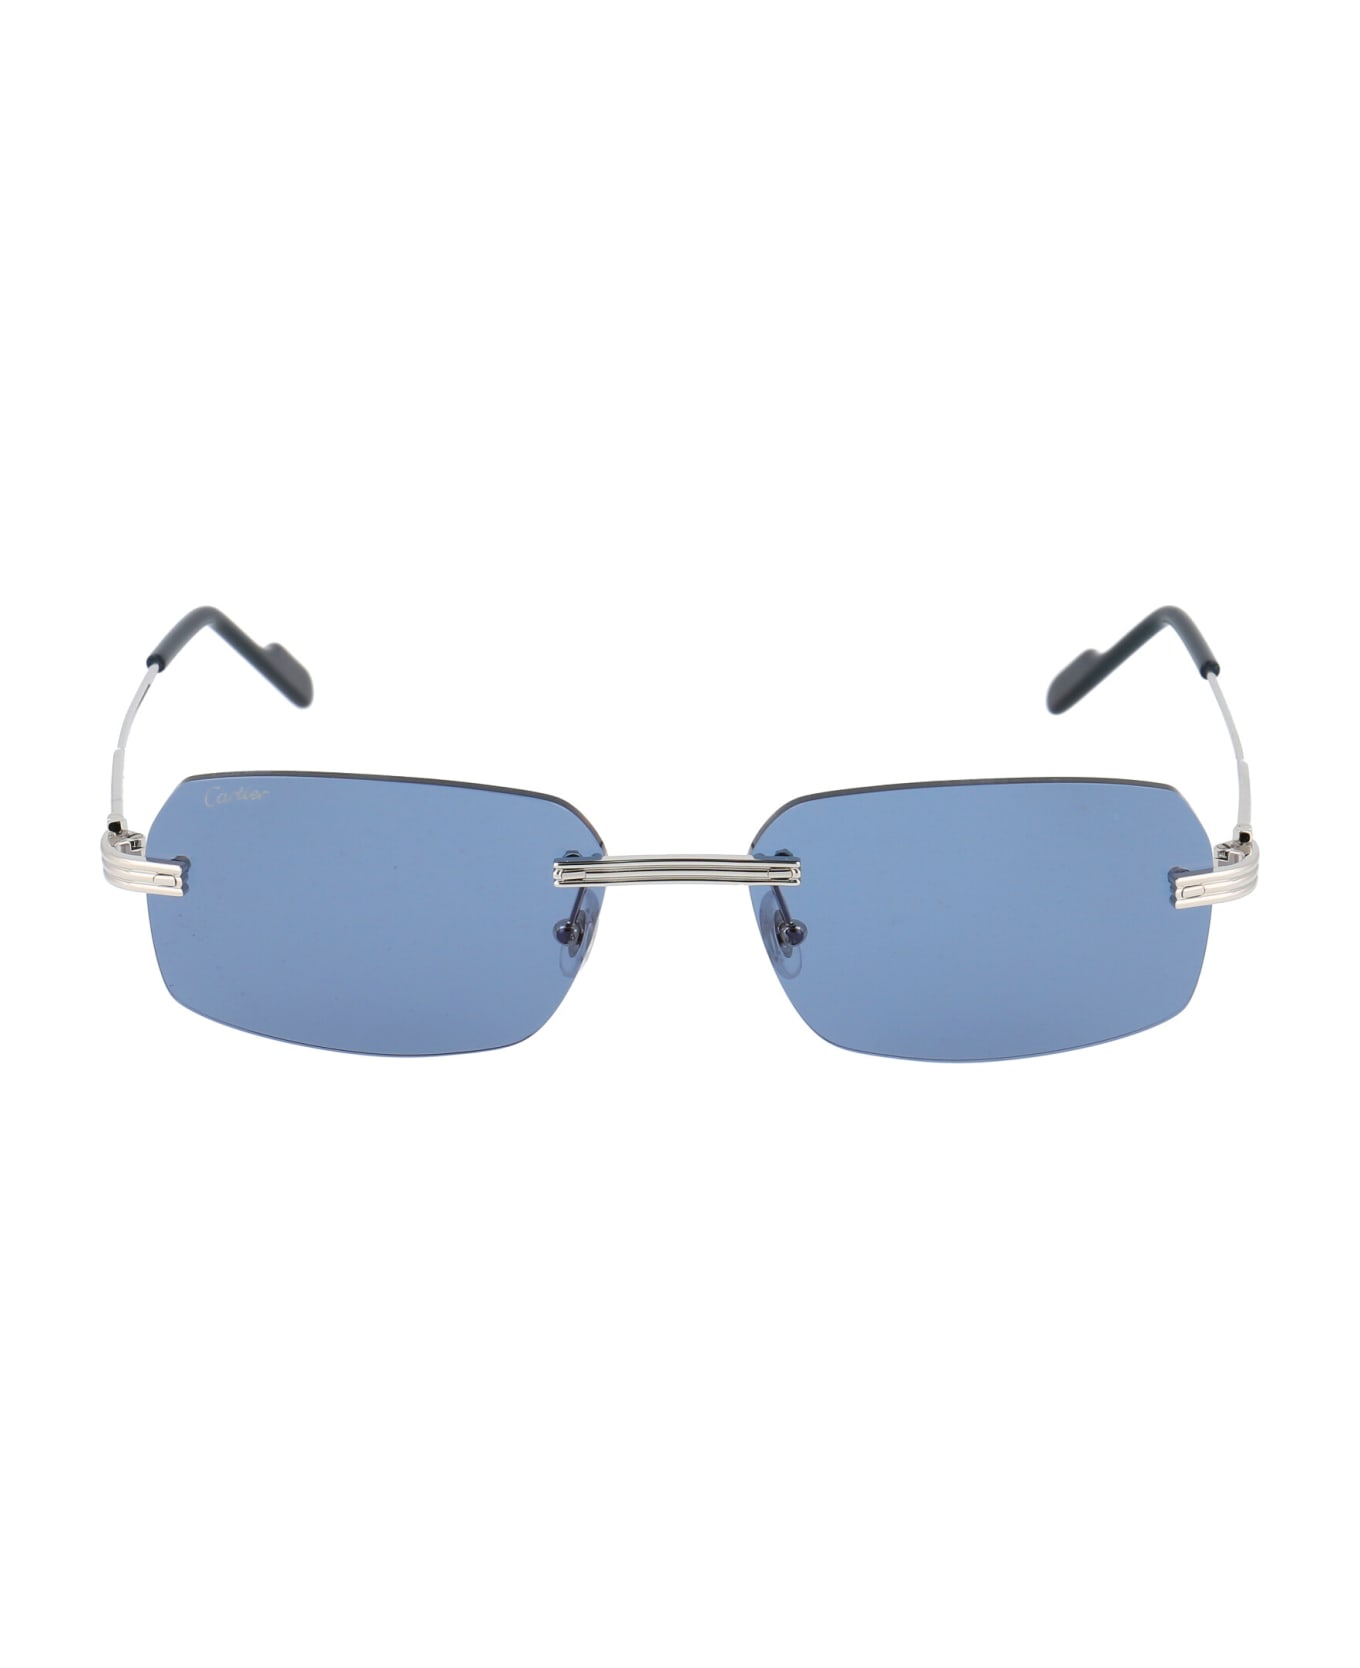 Cartier Eyewear Ct0271s Sunglasses - 003 SILVER SILVER BLUE